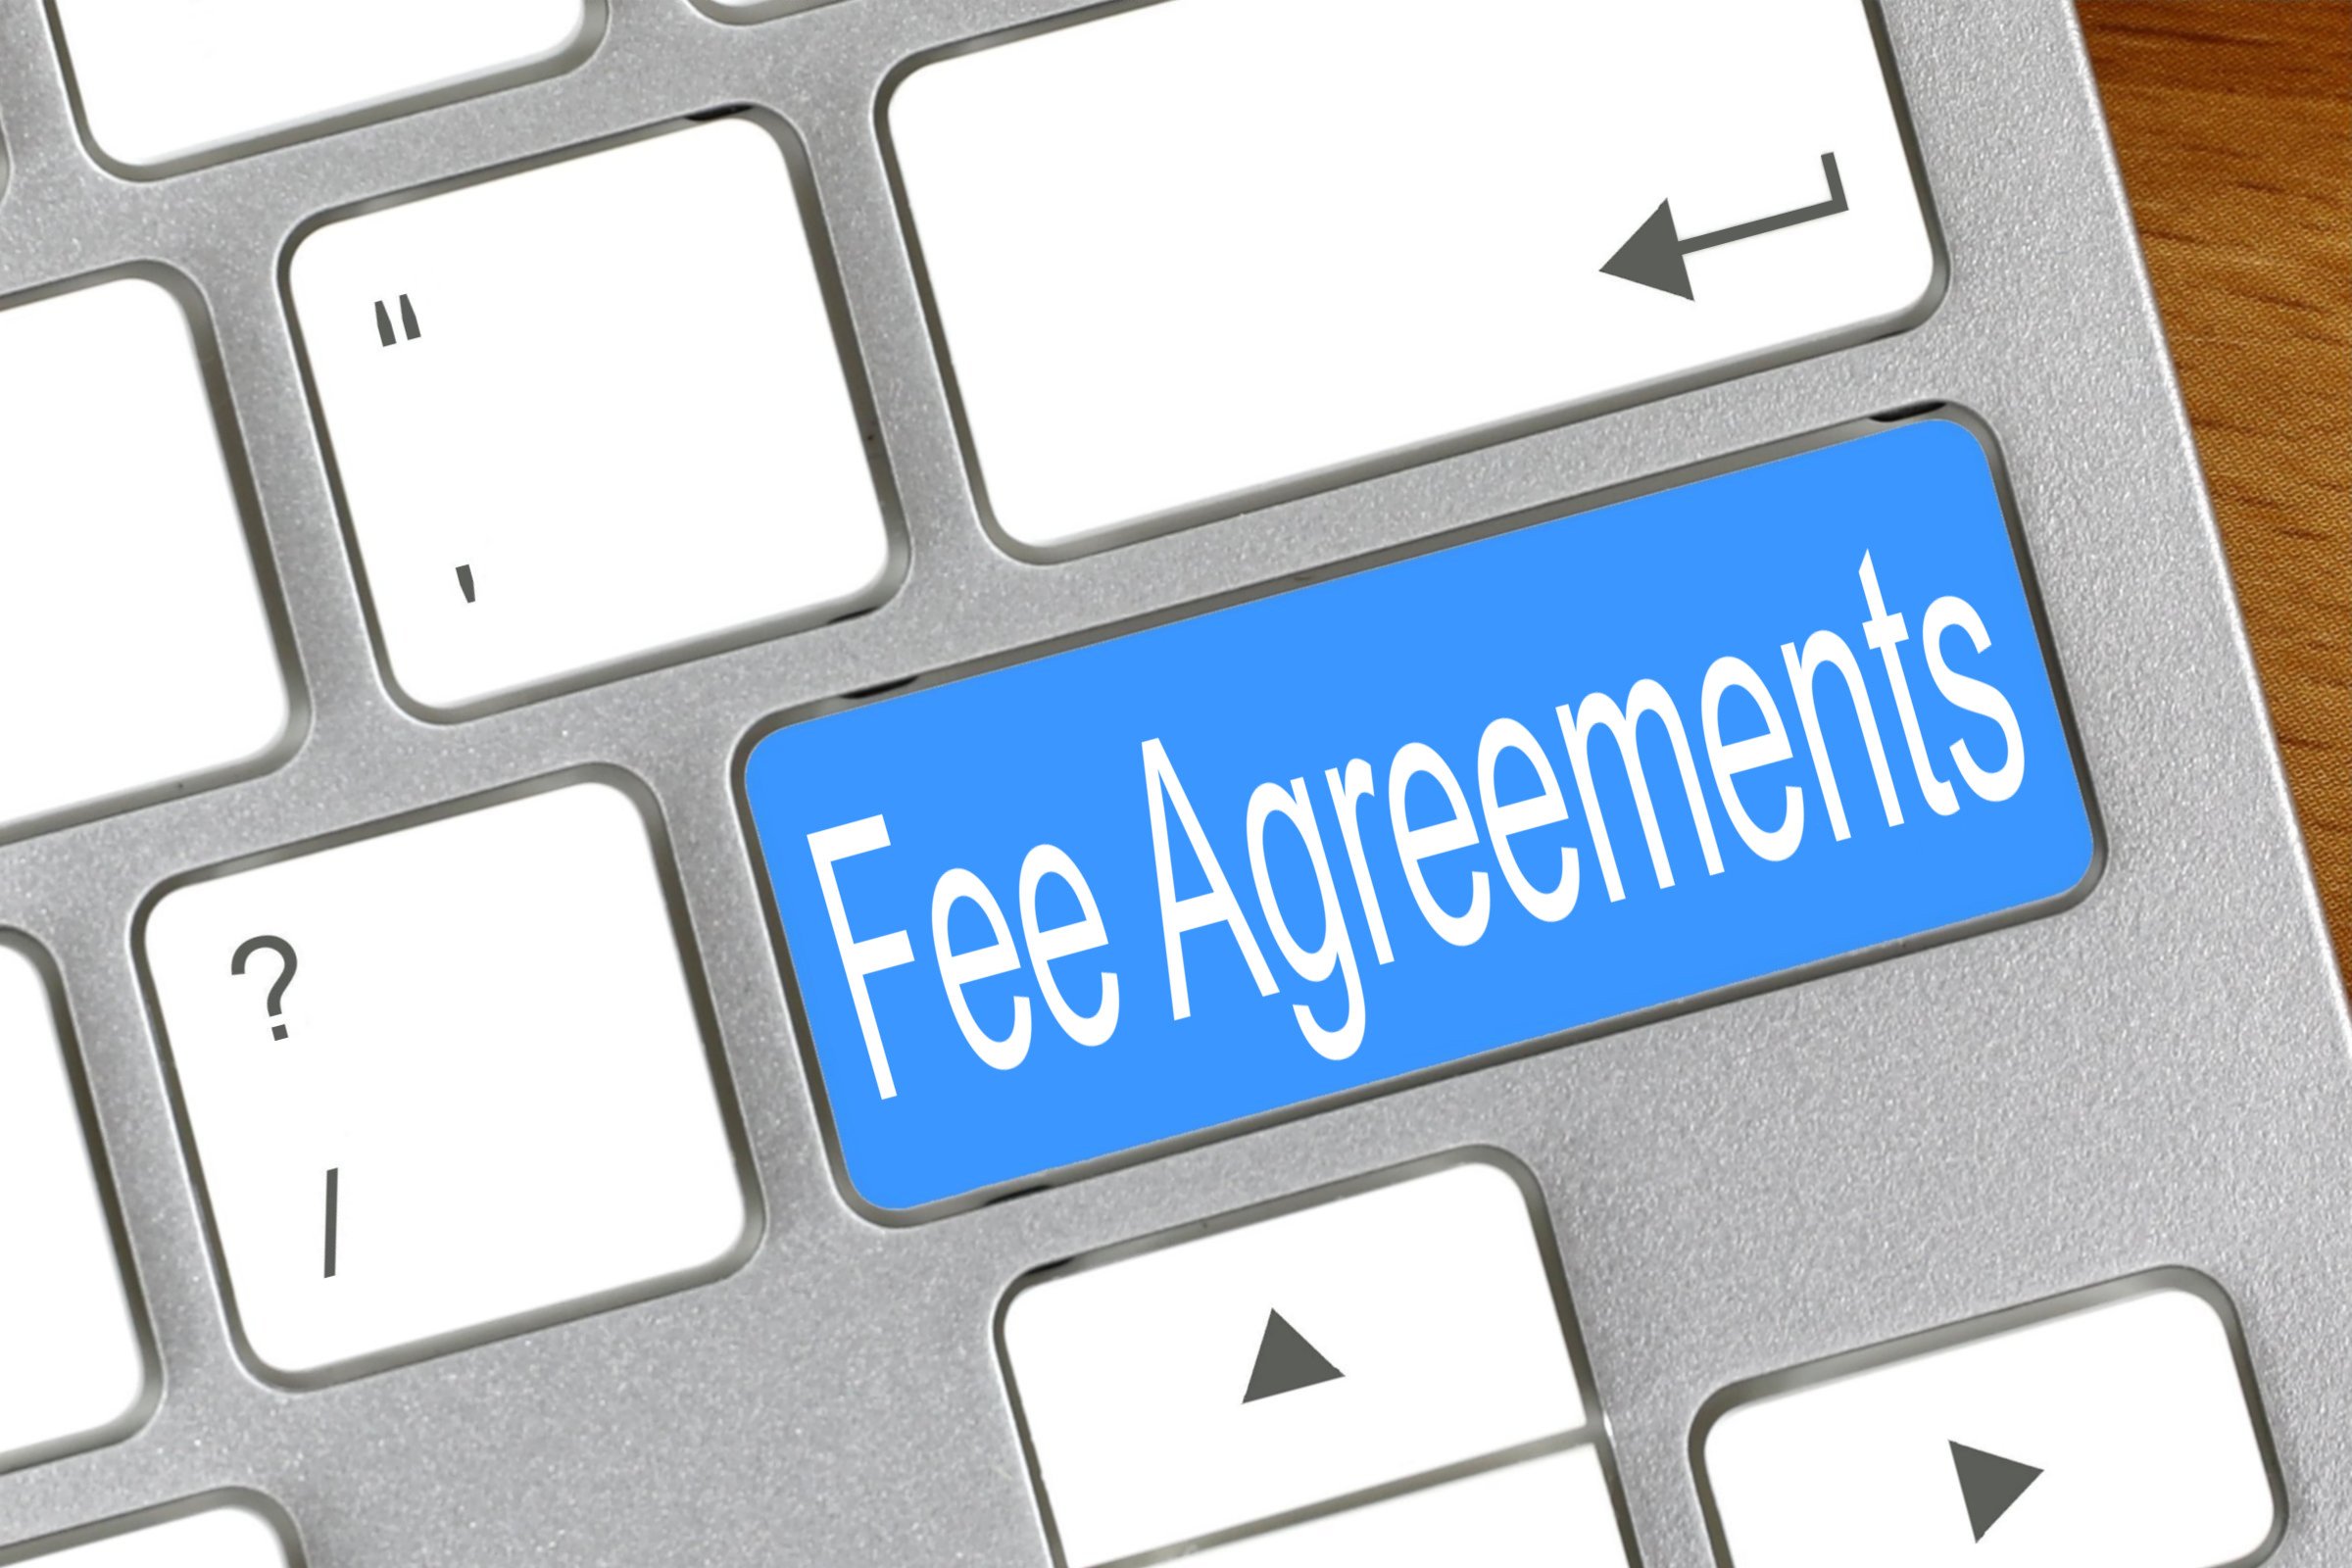 fee agreements